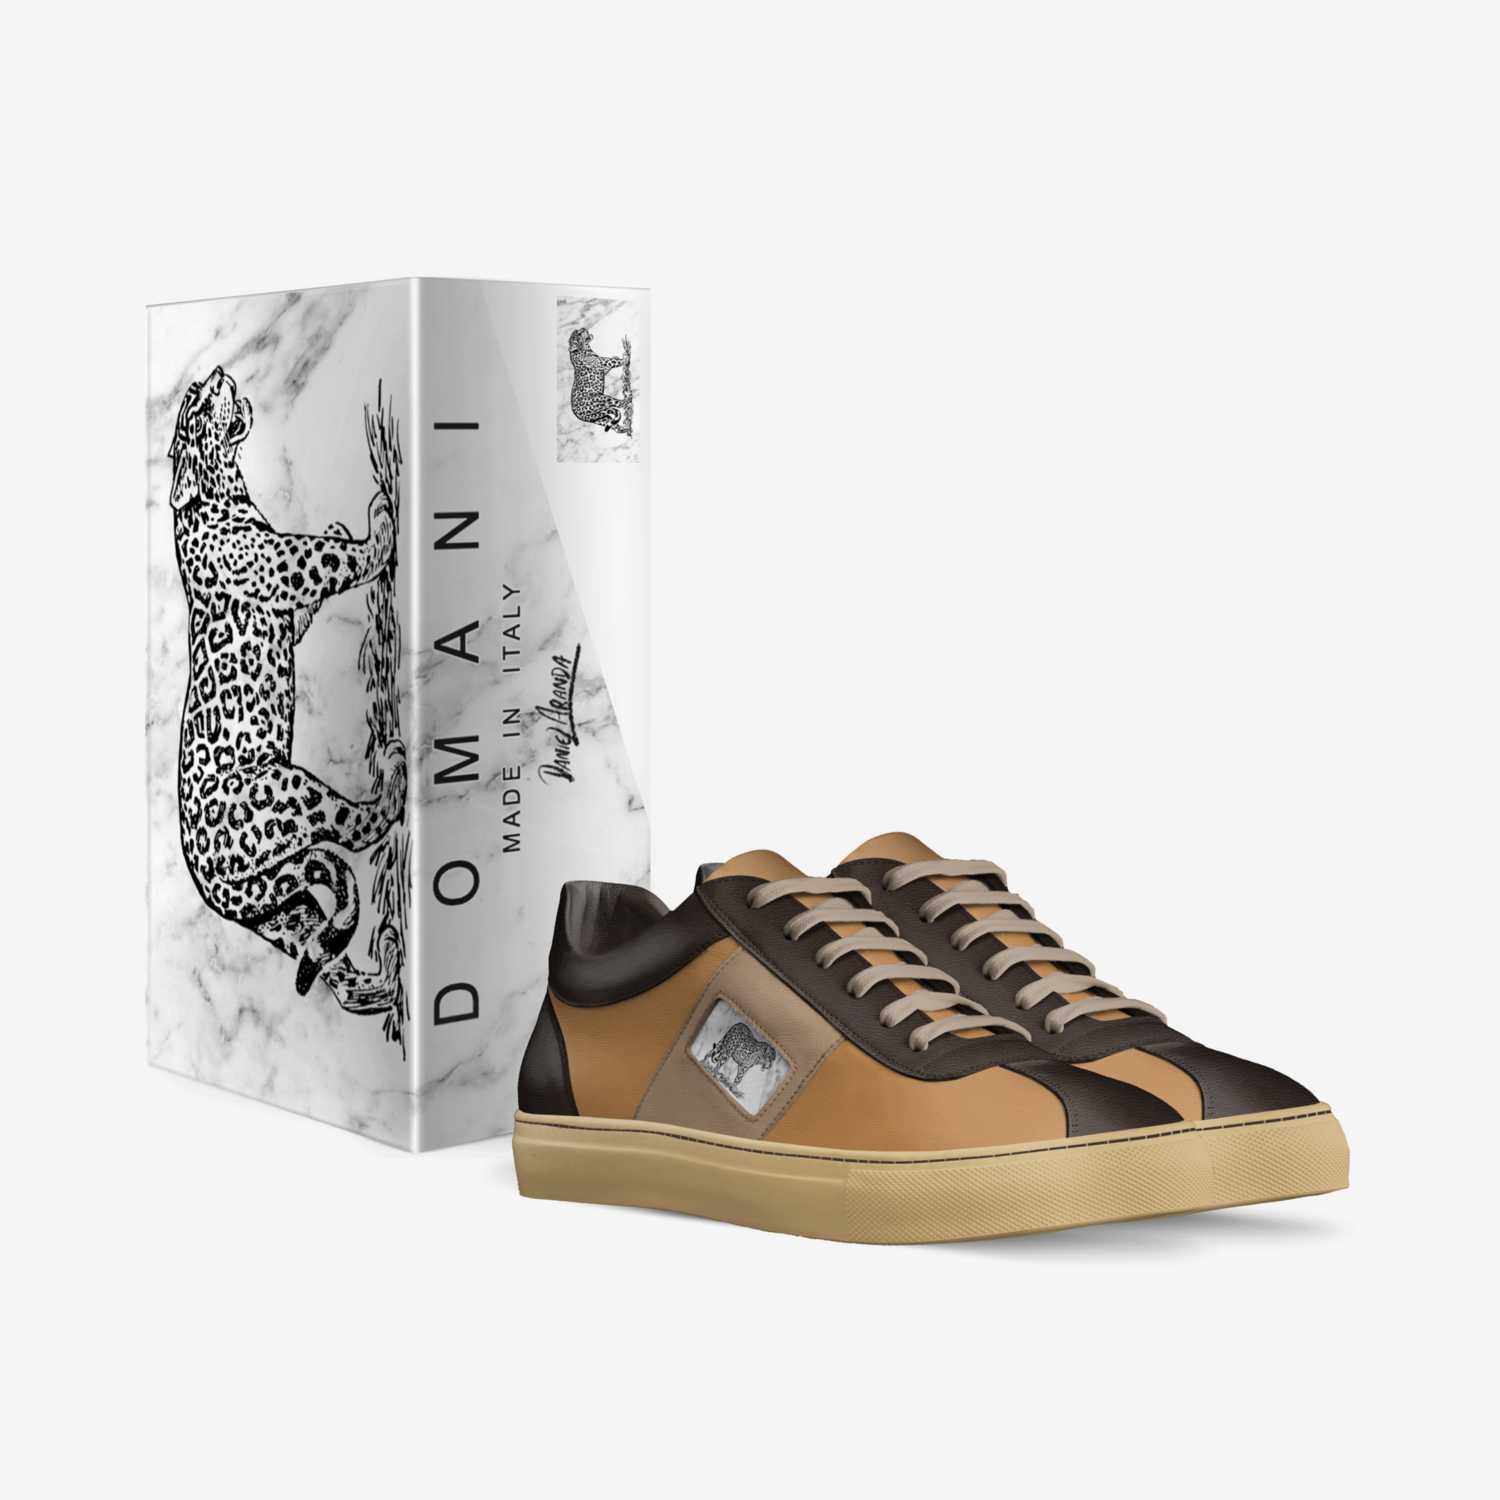 DOMANI custom made in Italy shoes by Daniel Aranda | Box view